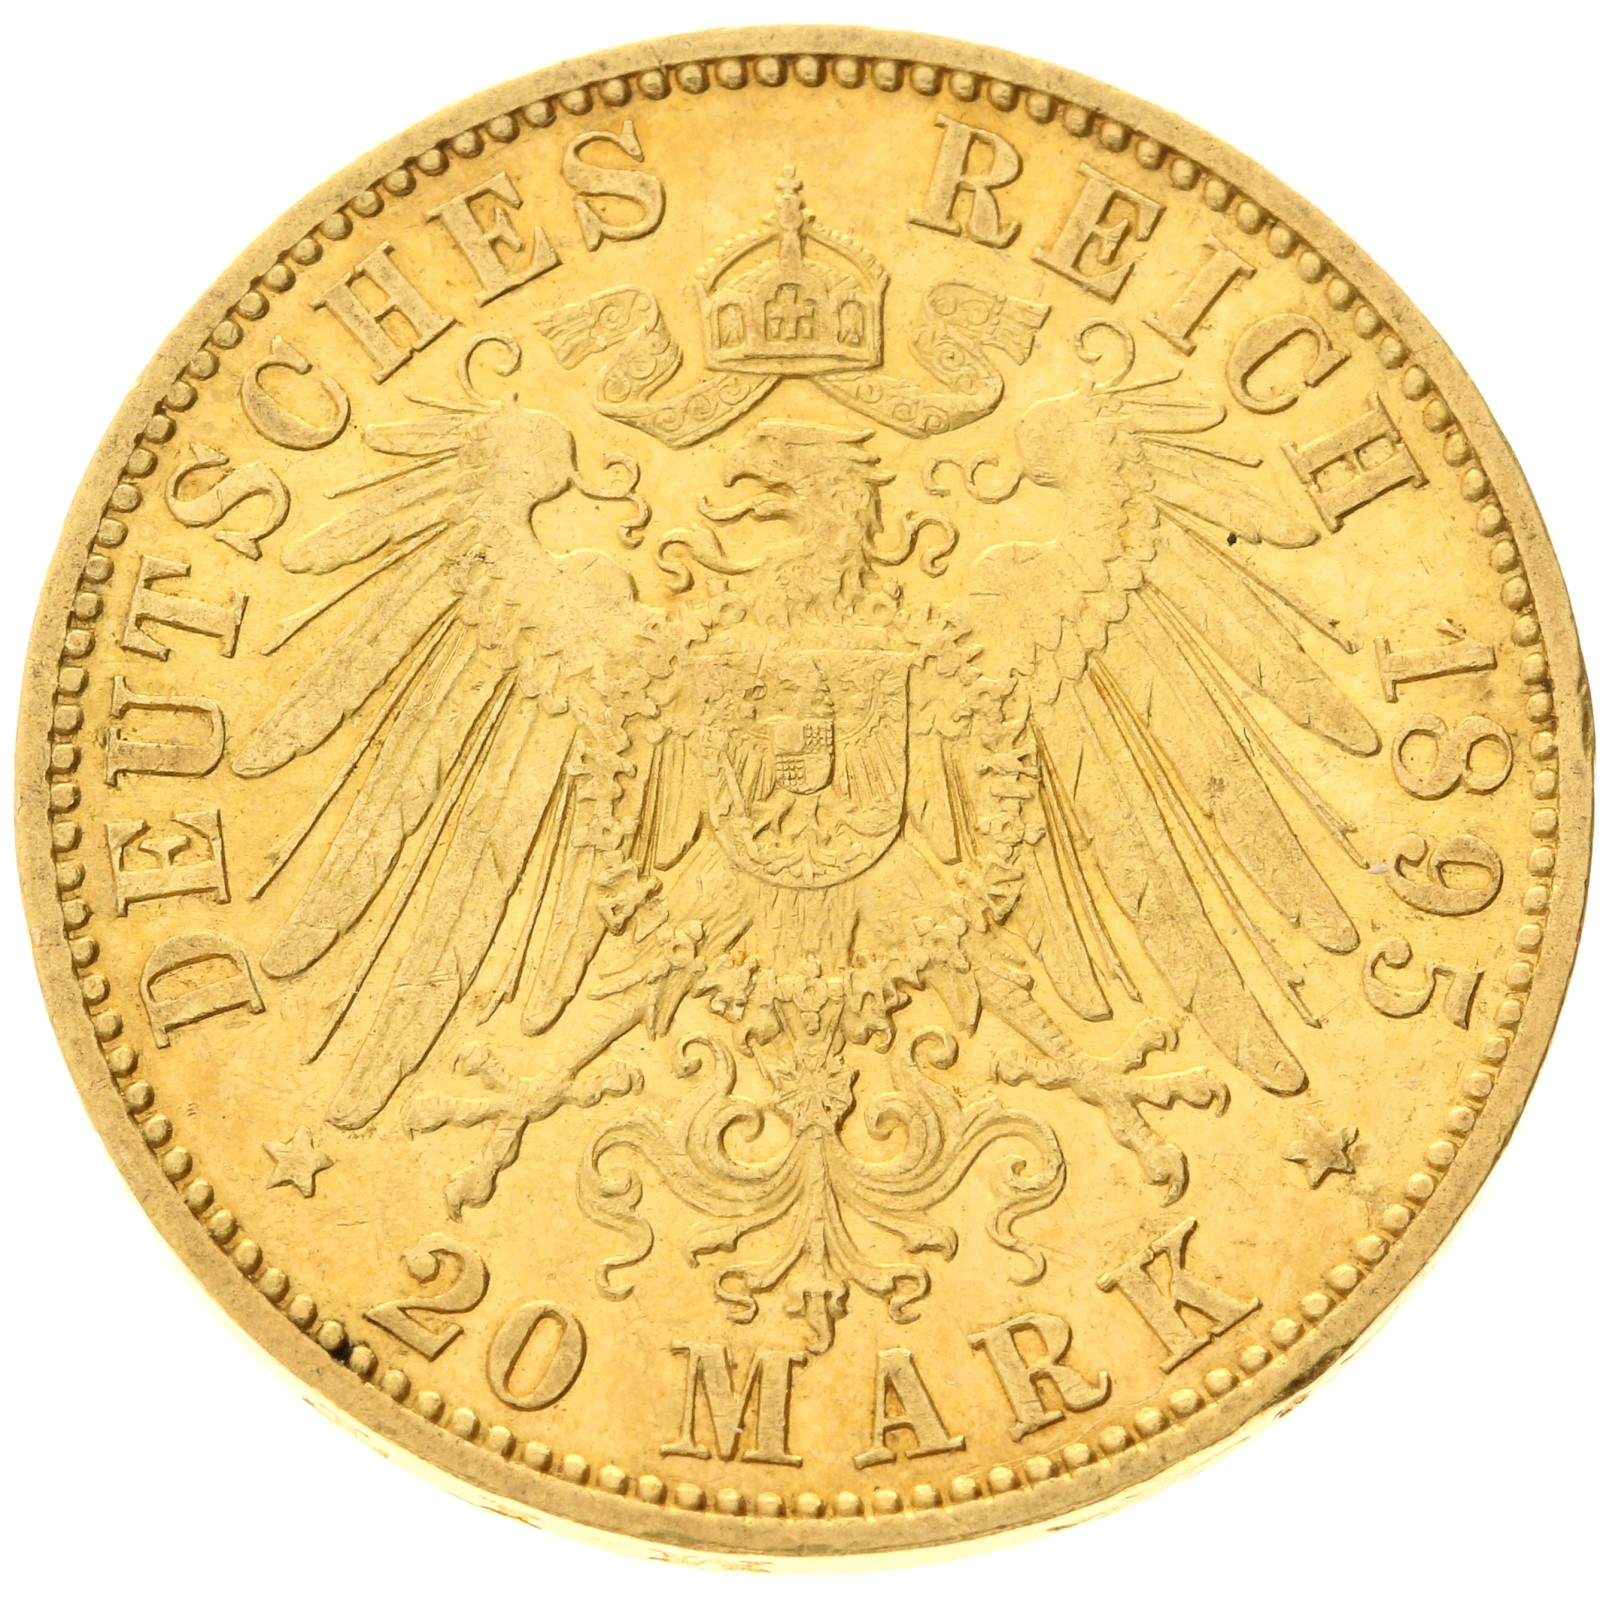 Germany - Prussia - 20 mark - 1895 - A - Wilhelm II 